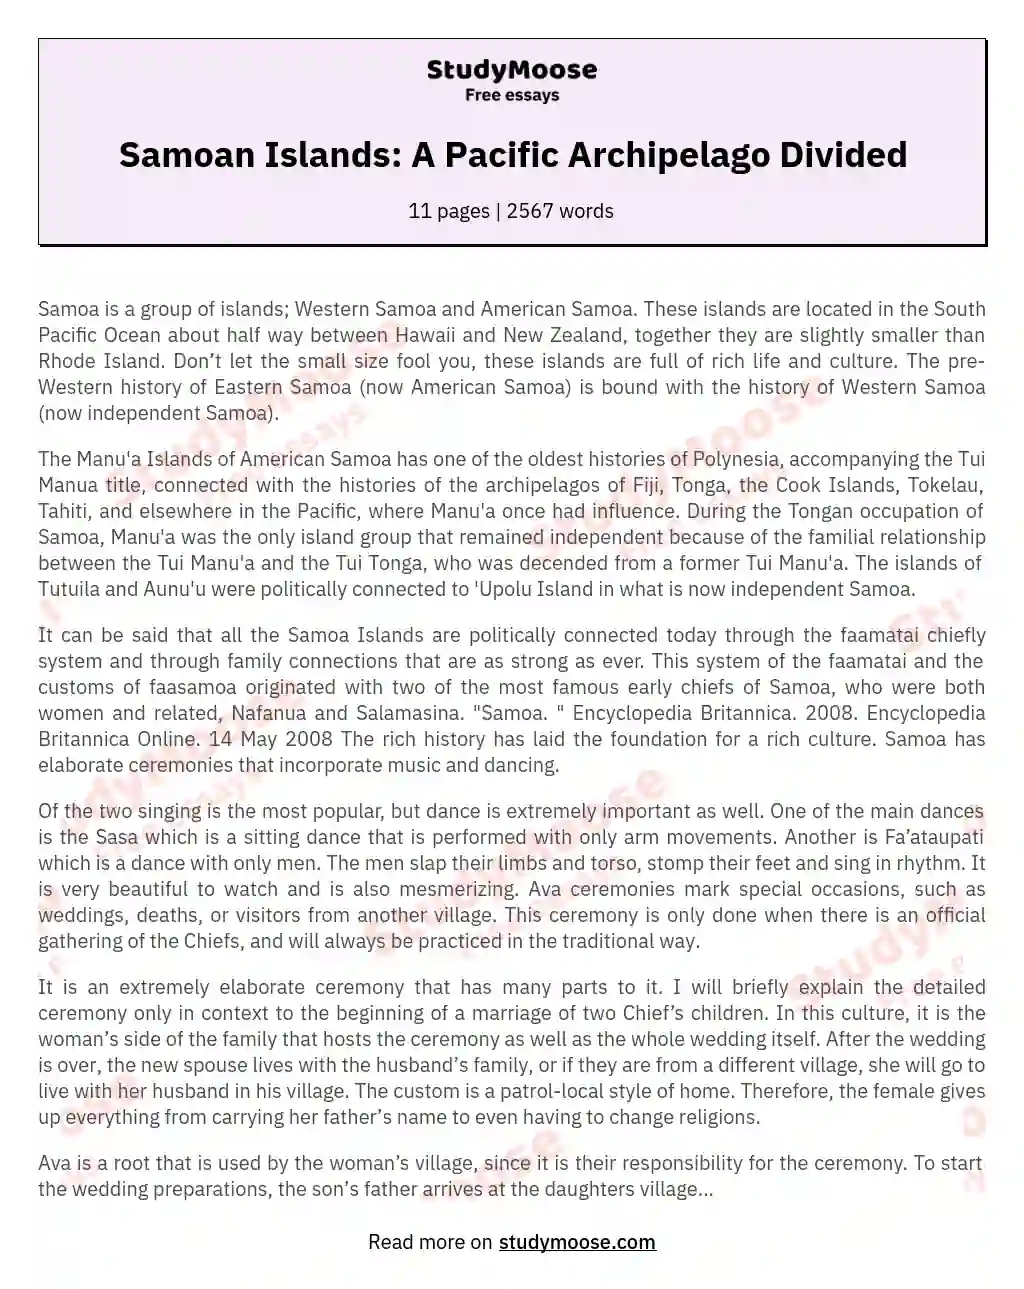 Samoan Islands: A Pacific Archipelago Divided essay